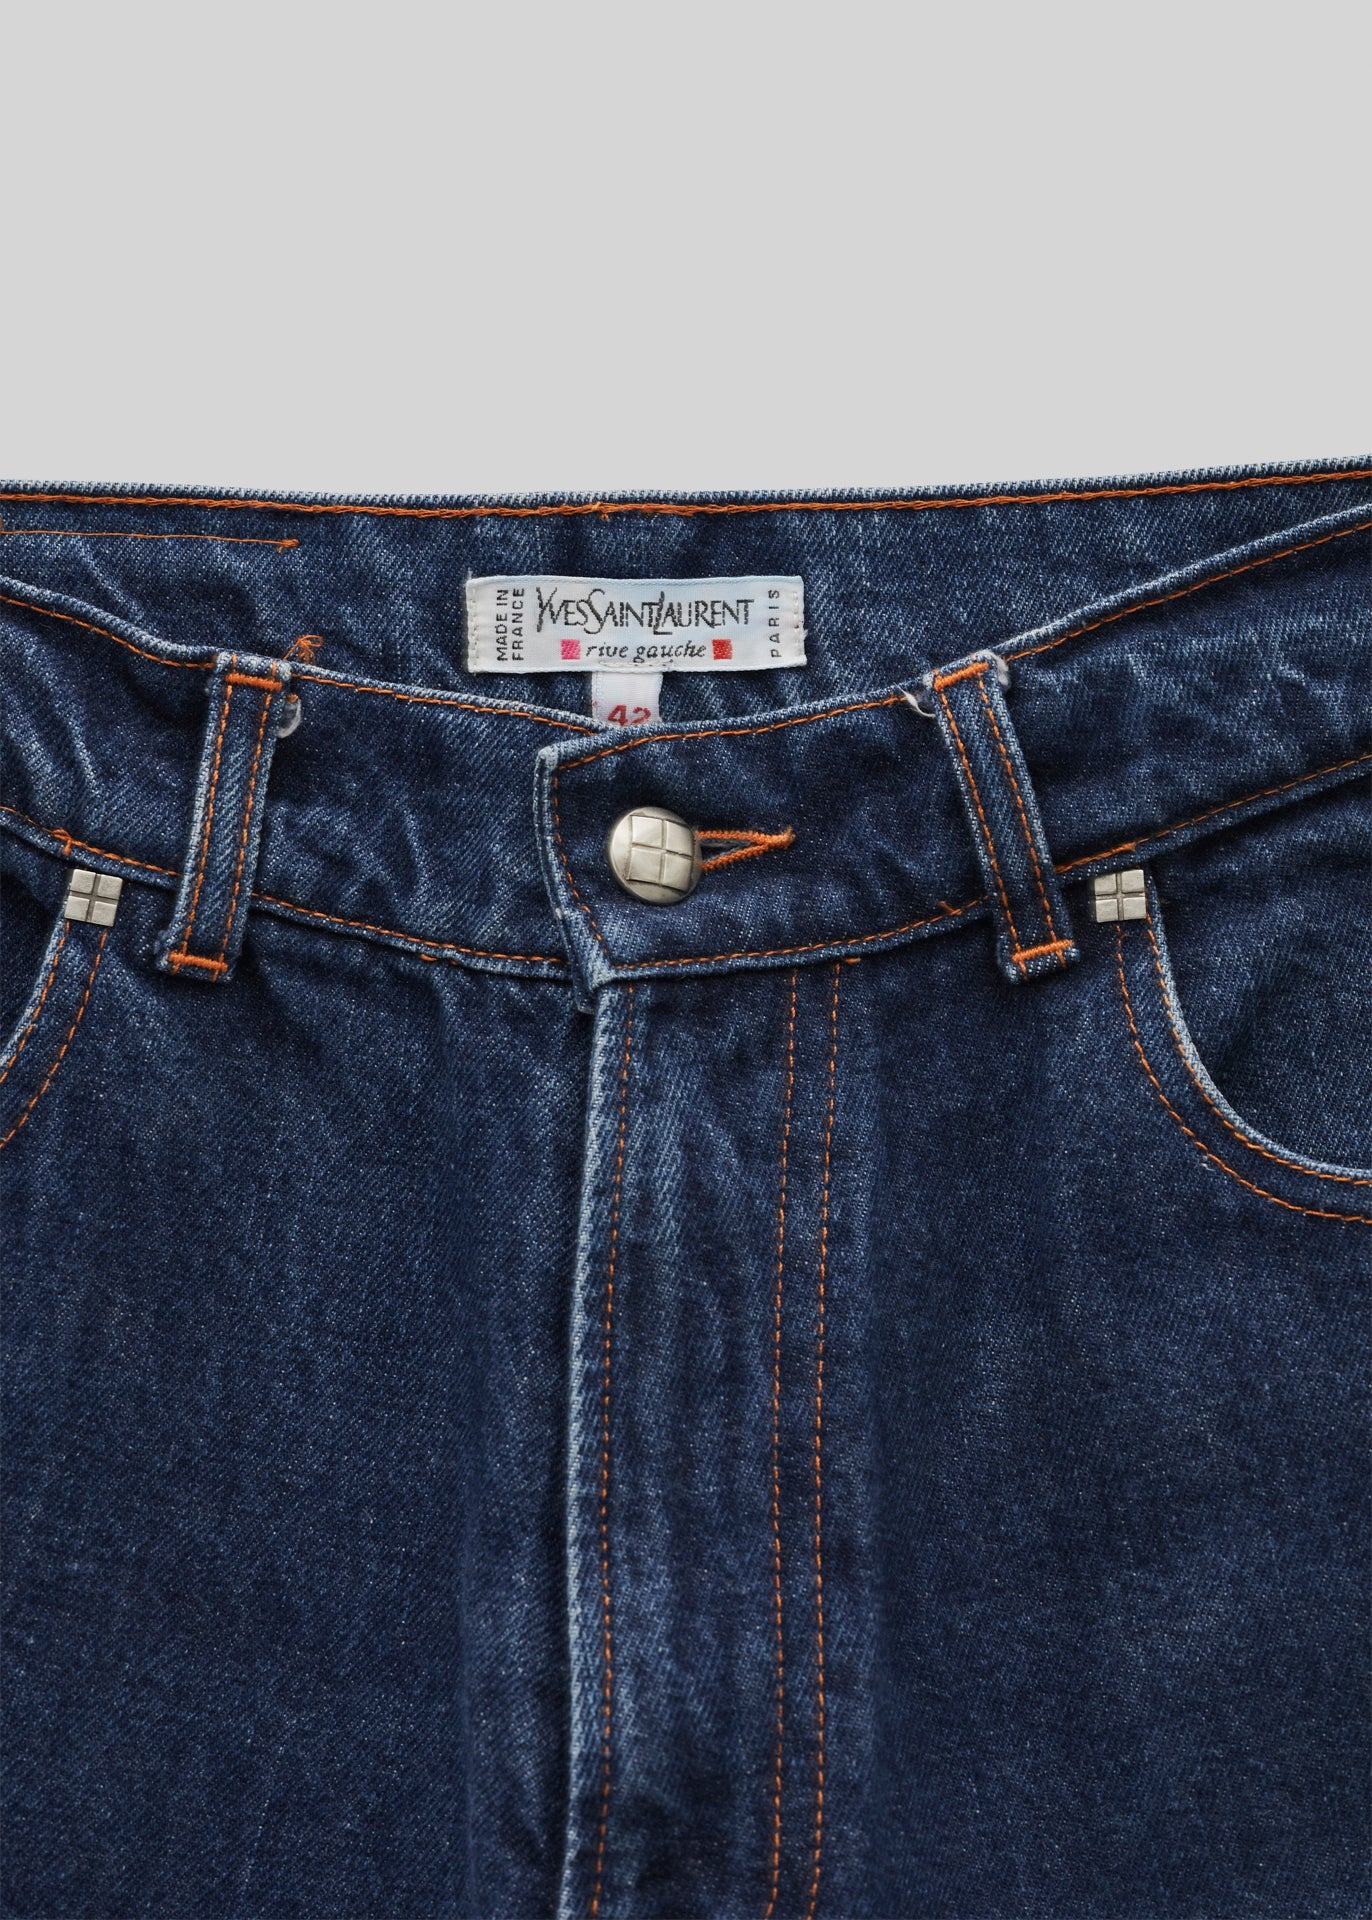 Vintage YSL jeans - 42